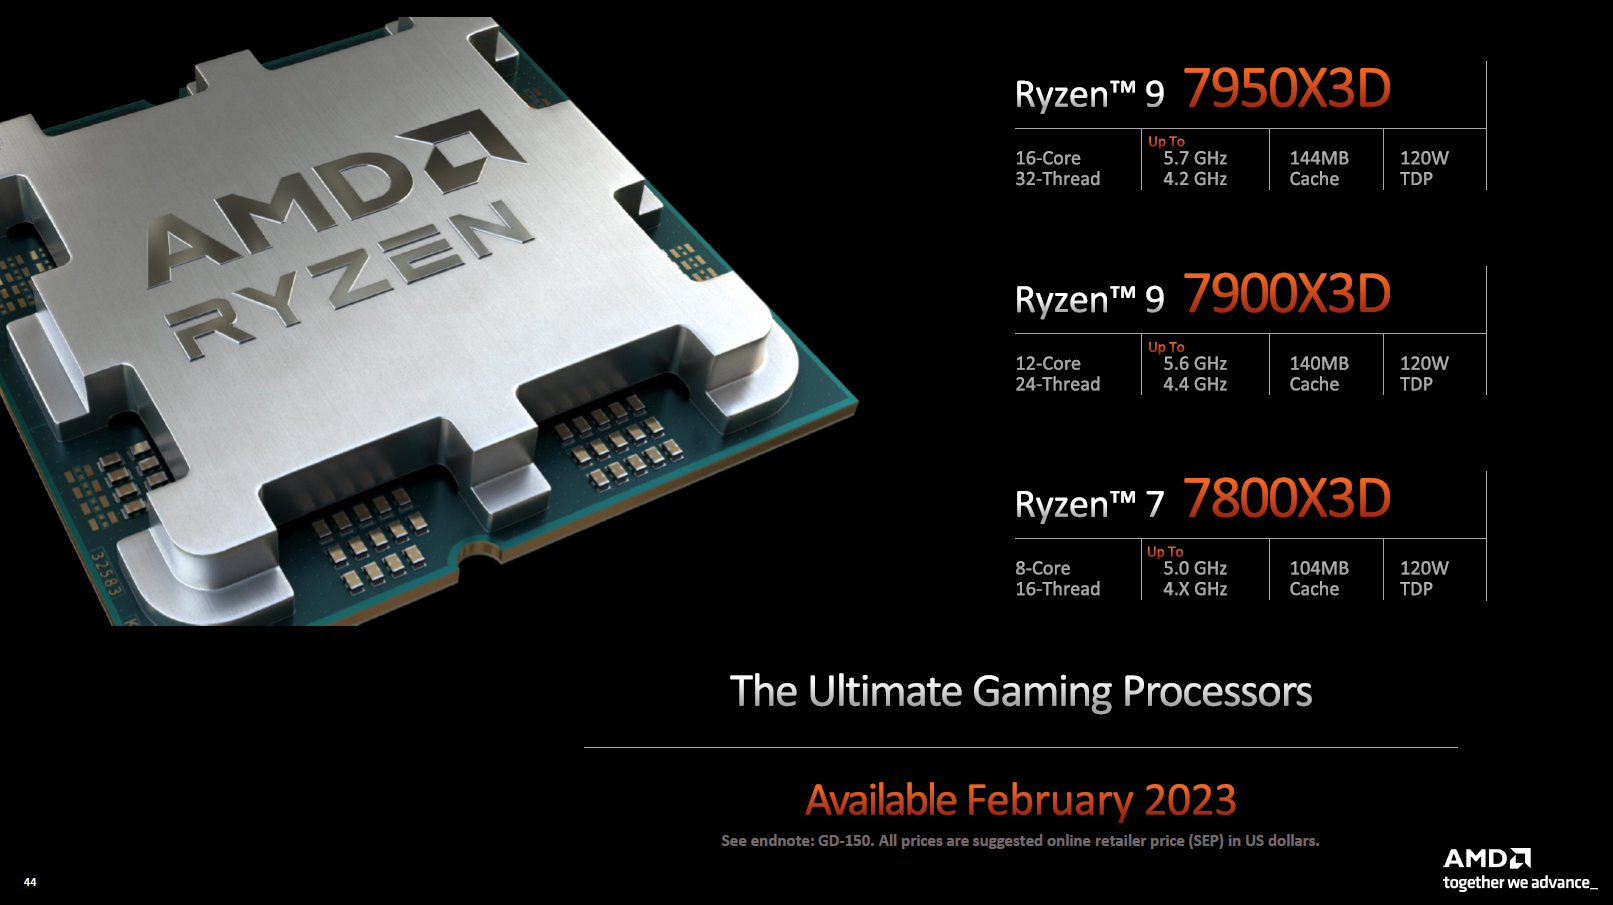 amd ryzen 7000 x3d slide final เอเอ็มดีเปิดตัวซีพียู AMD RYZEN 9 7950X3D 16C/32T ความเร็ว 5.7Ghz อัดแคช Cache มากถึง 144MB กันเลยทีเดียว  